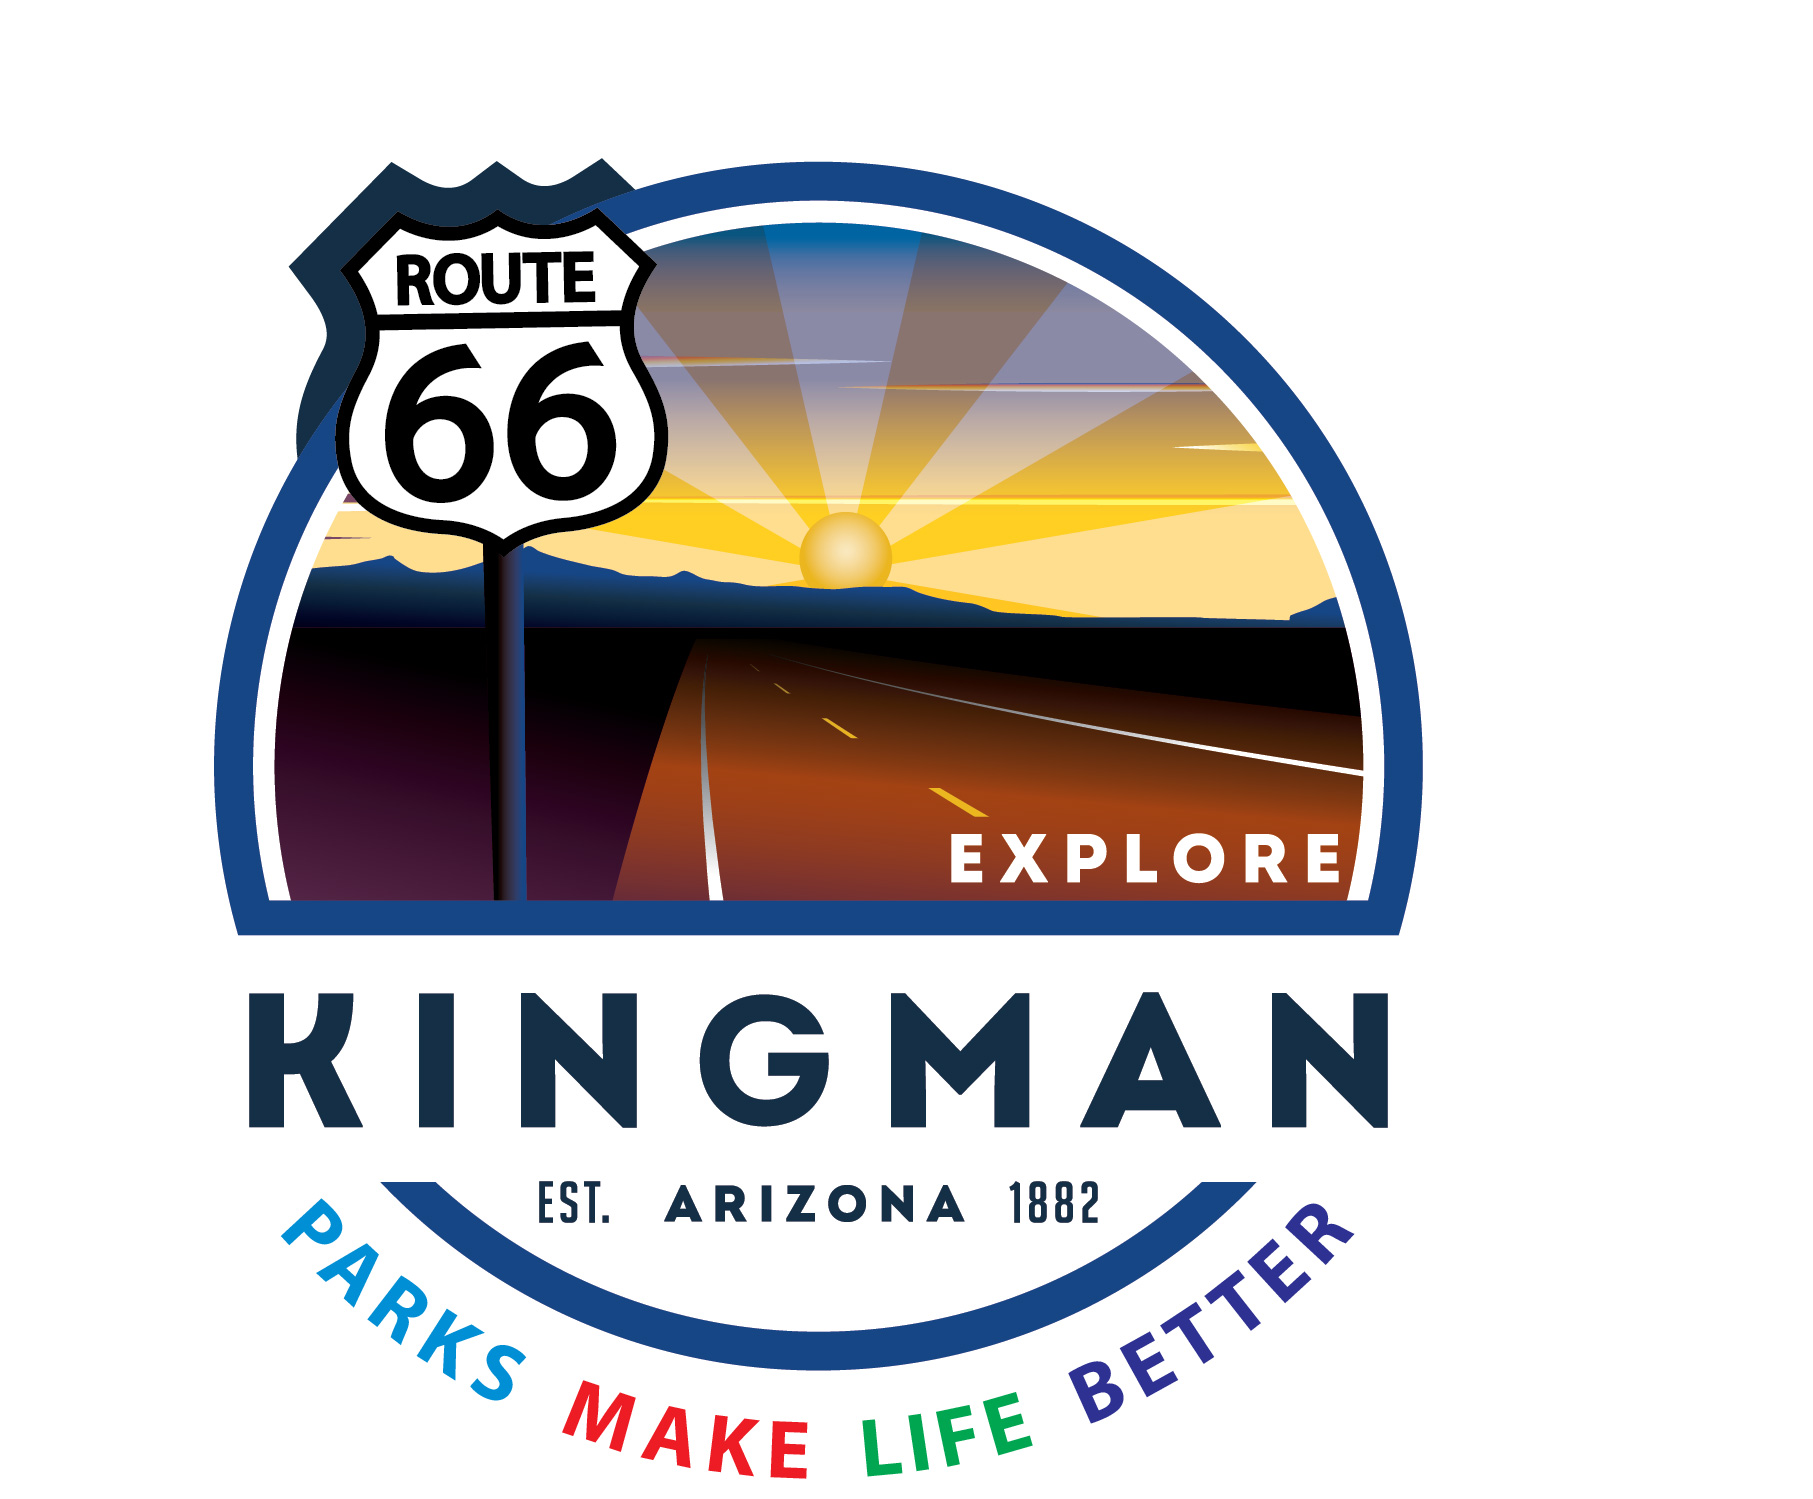 City of Kingman, Arizona